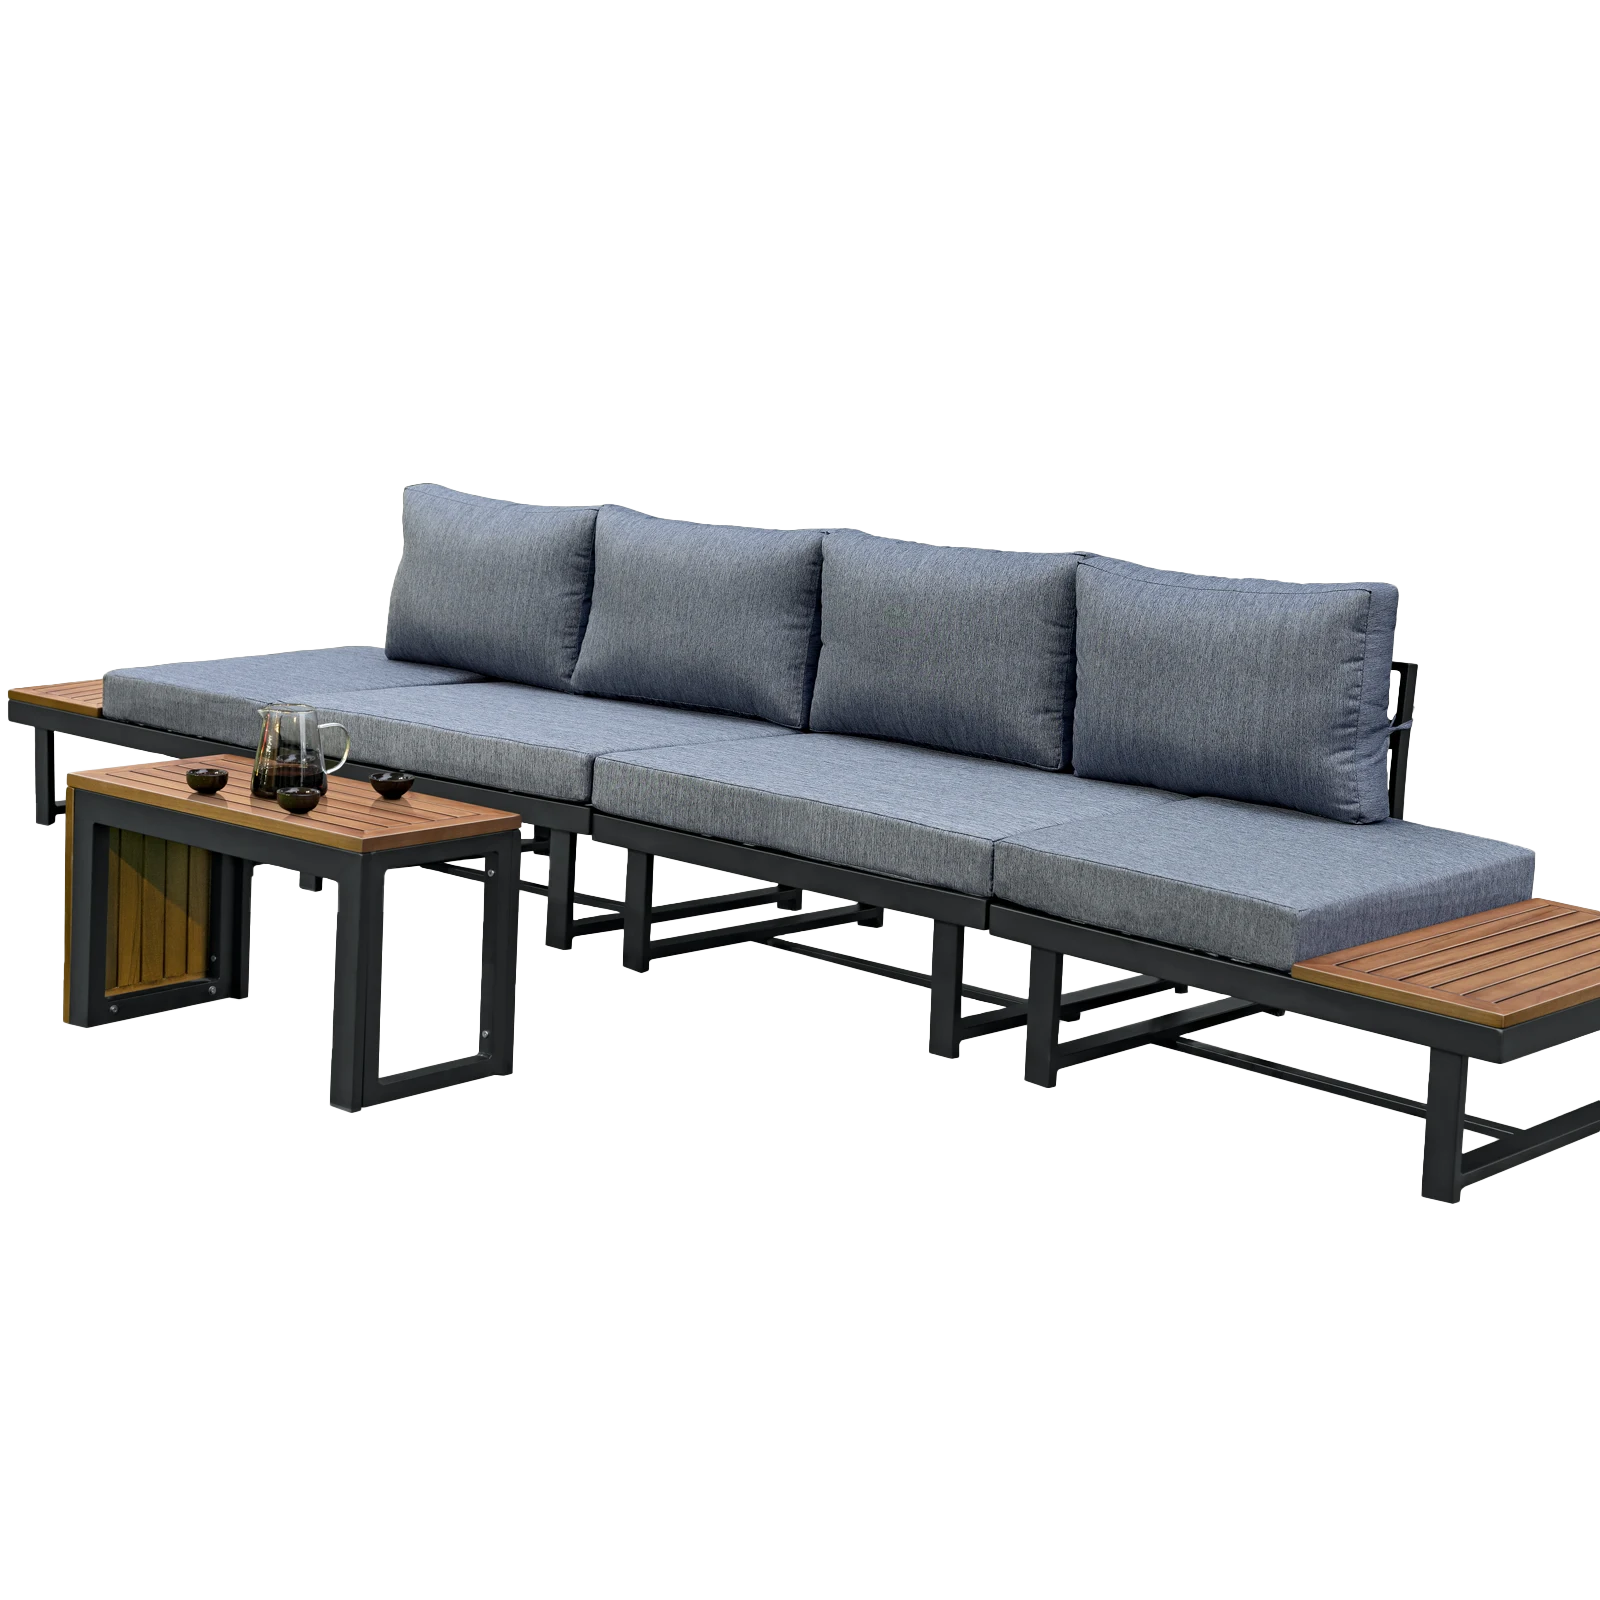 Patio Sectional Sofa Set